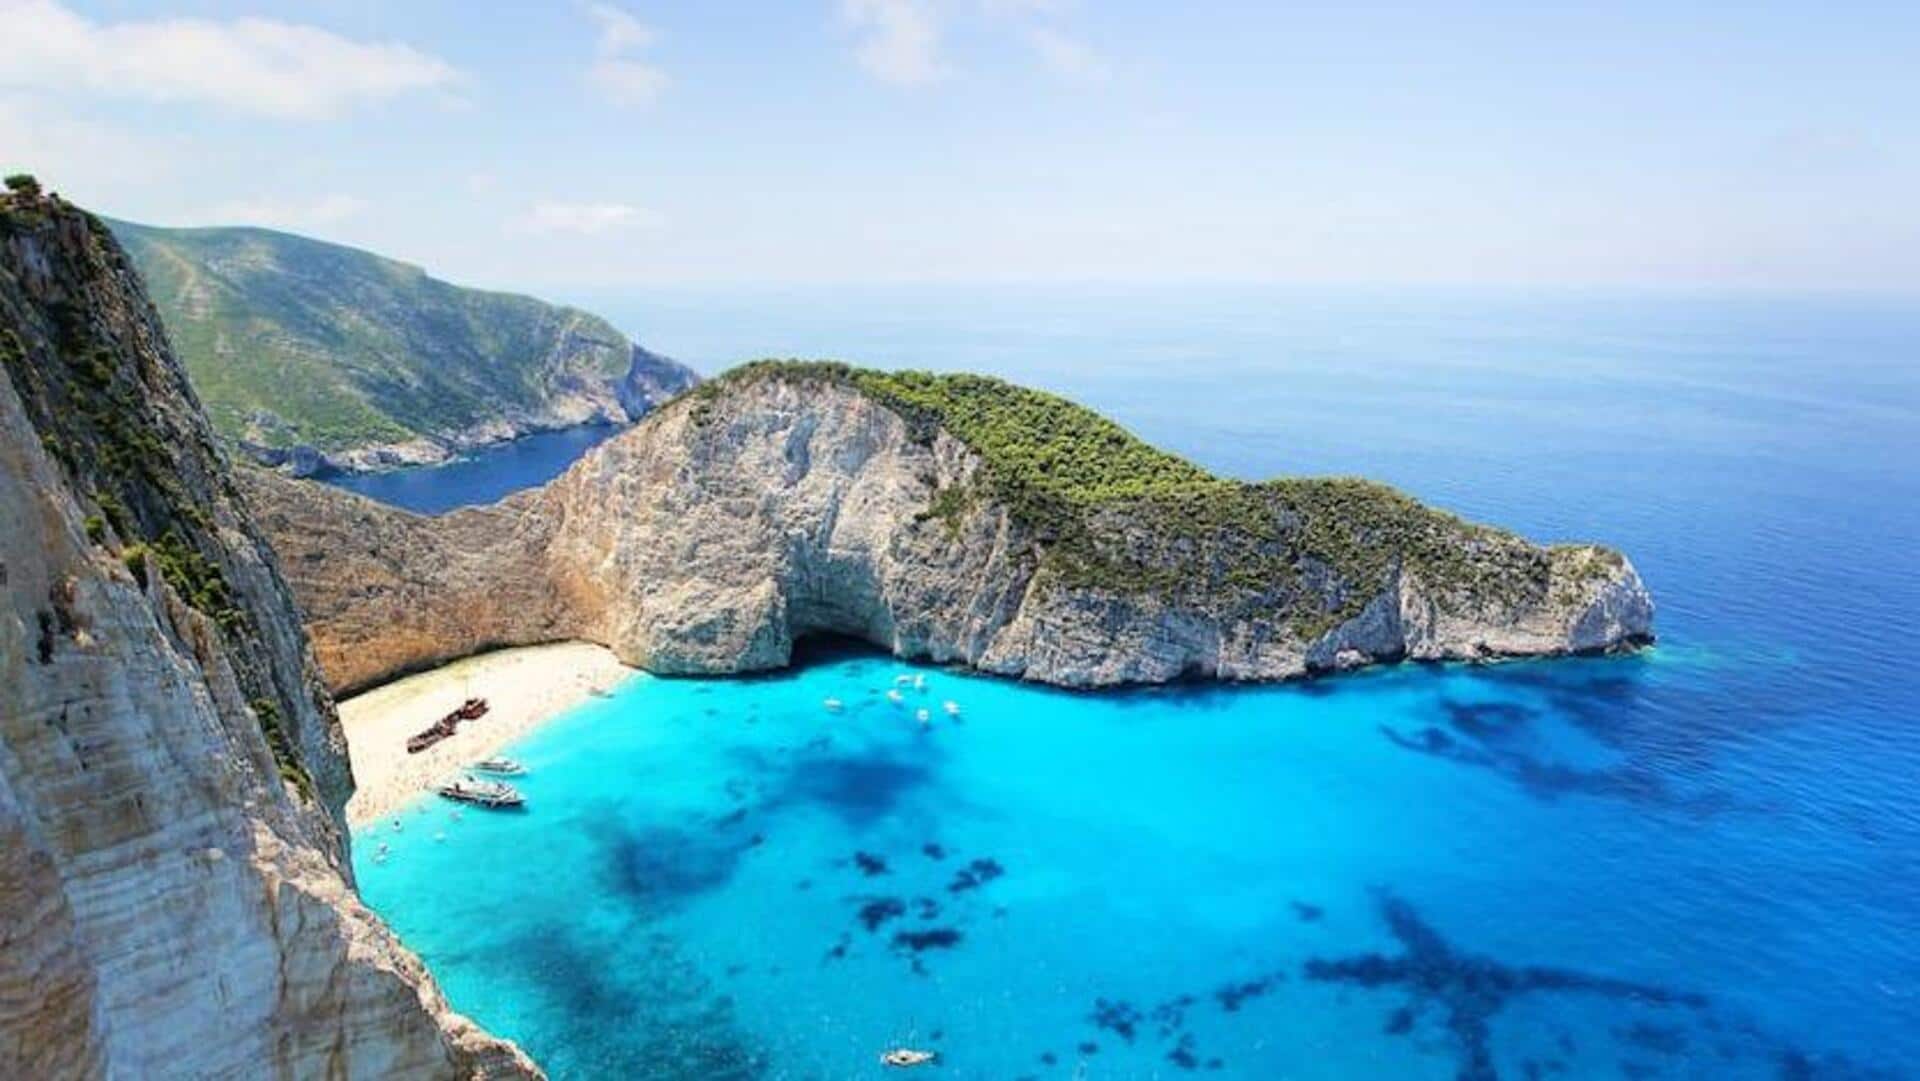 Greece's hidden island paradises that are worth exploring